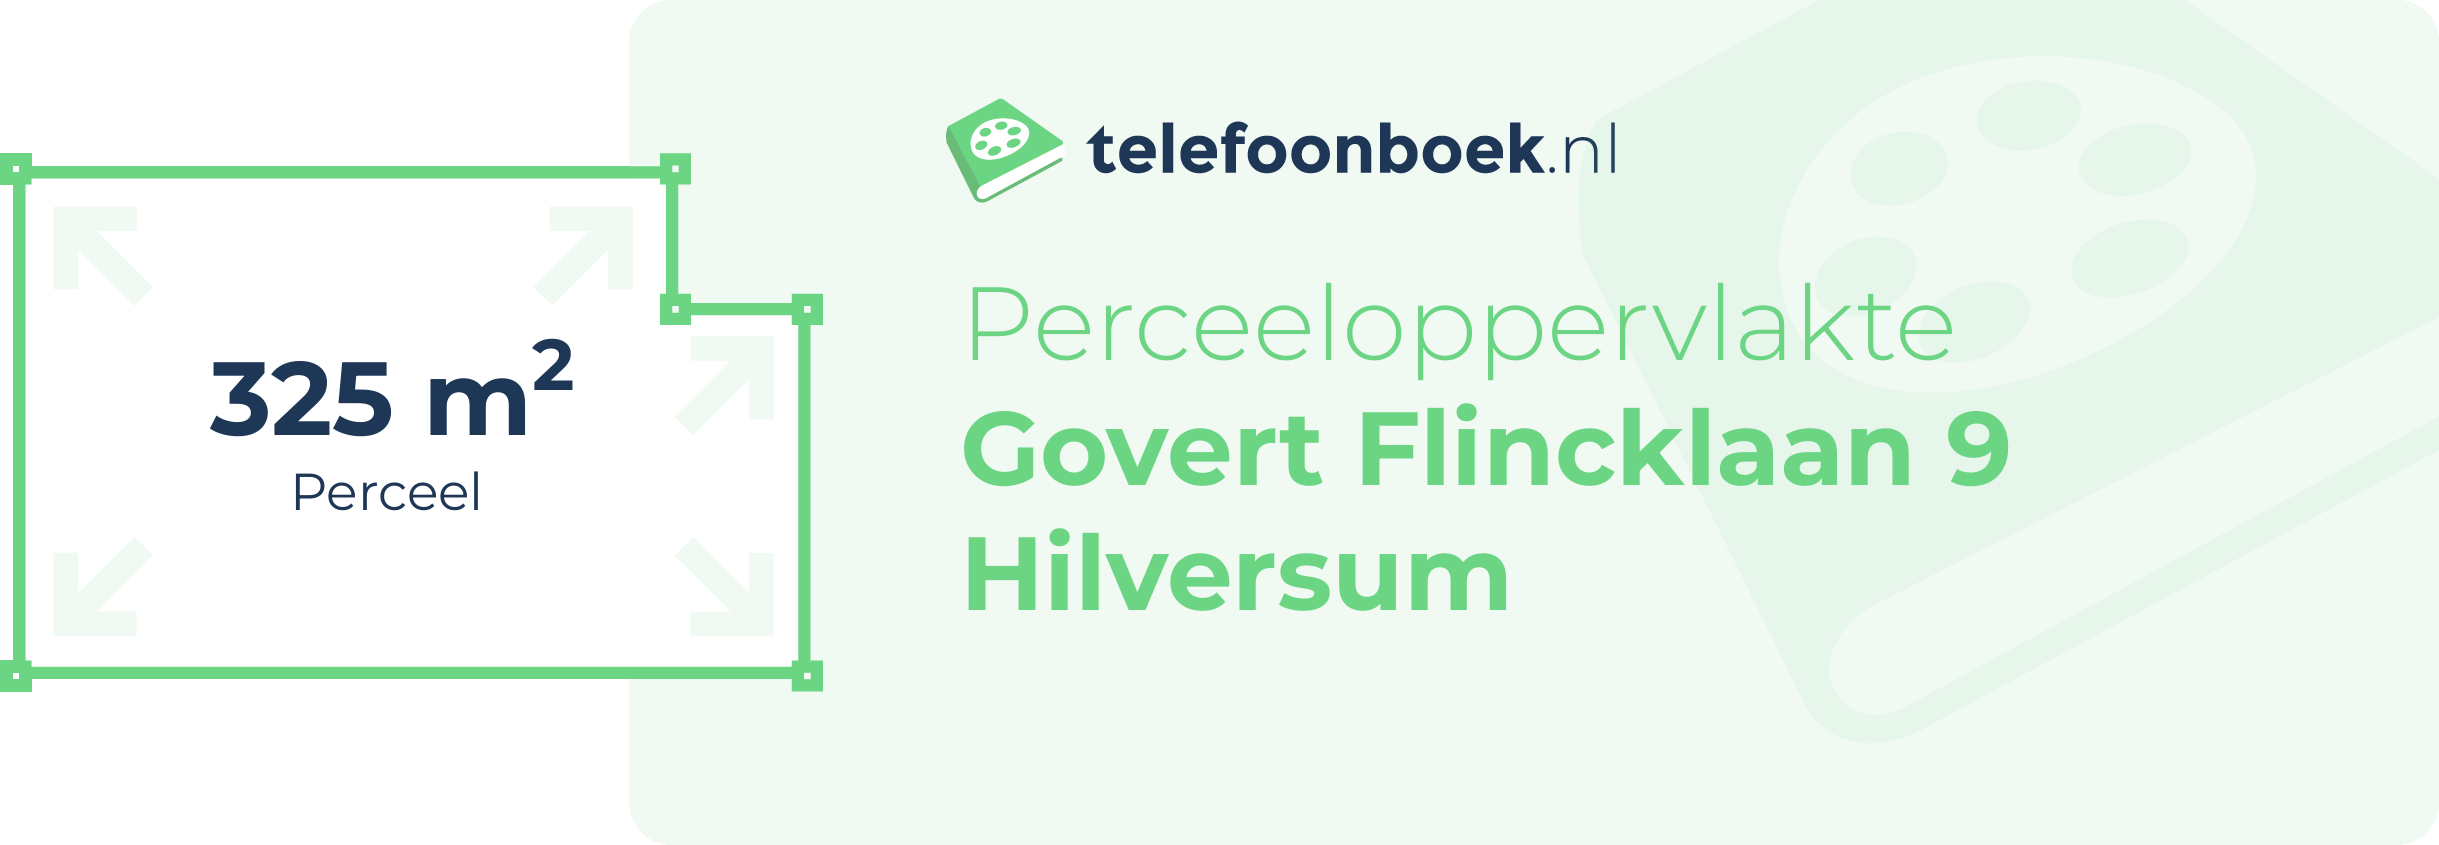 Perceeloppervlakte Govert Flincklaan 9 Hilversum